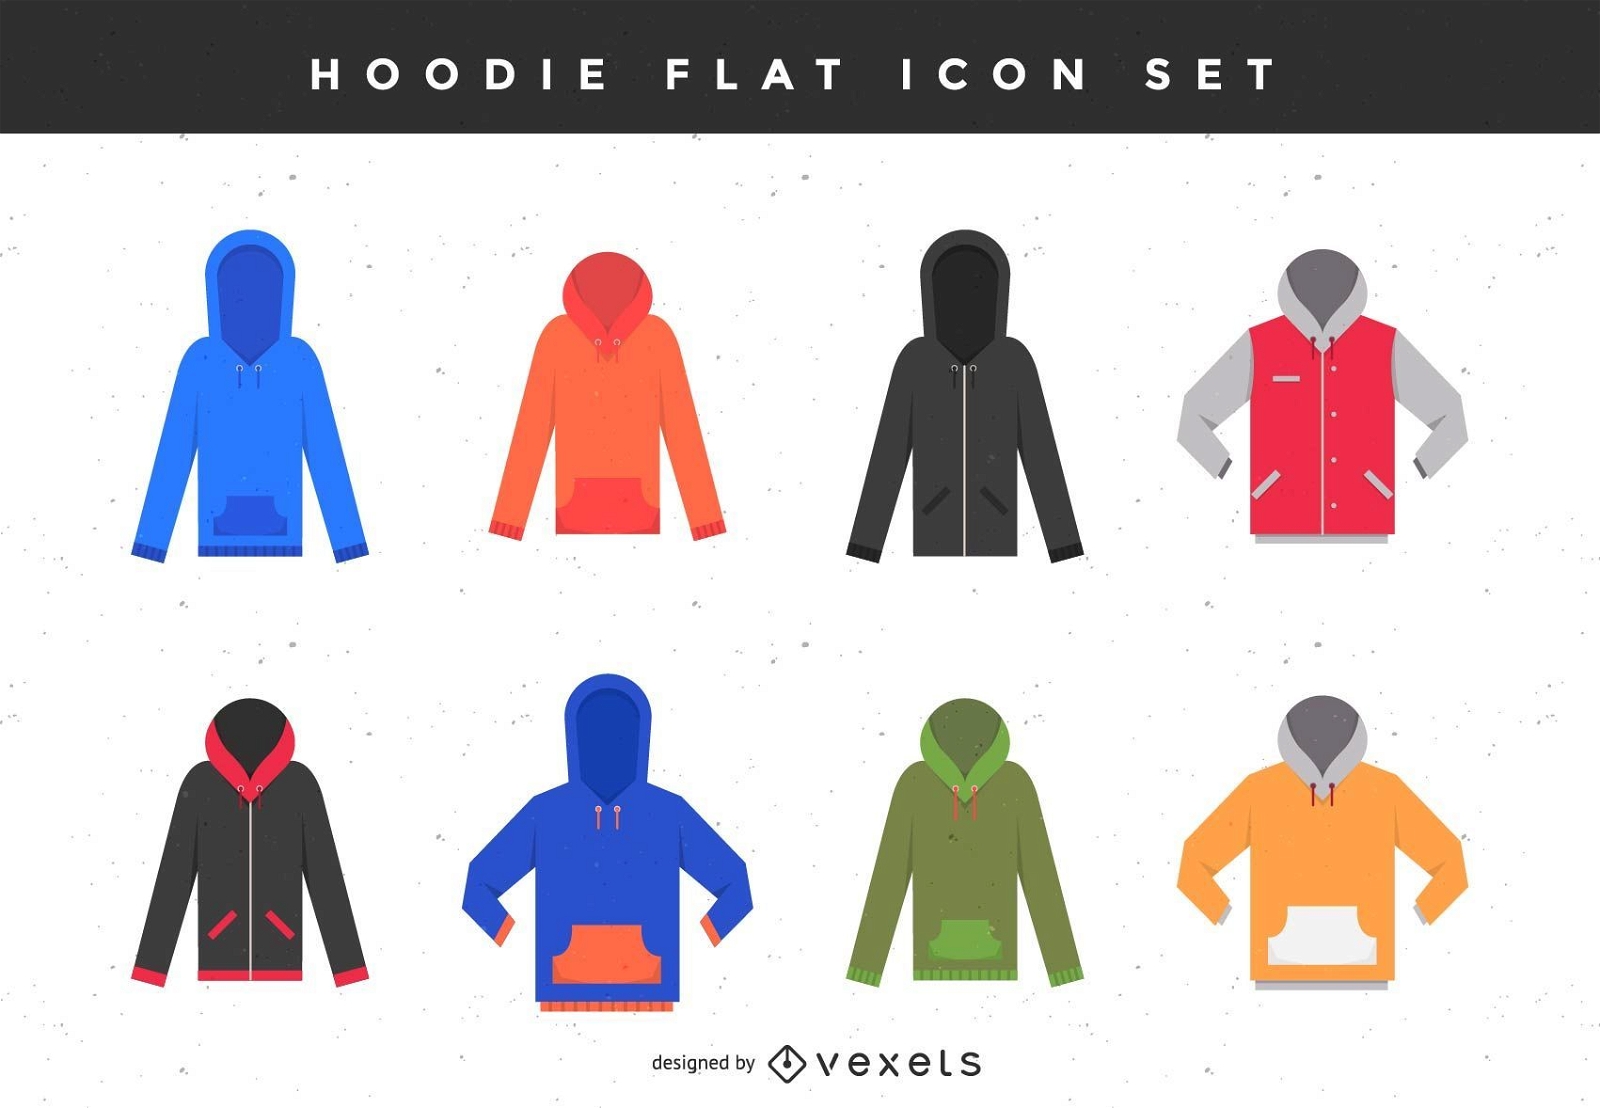 Hoodie flat icon set